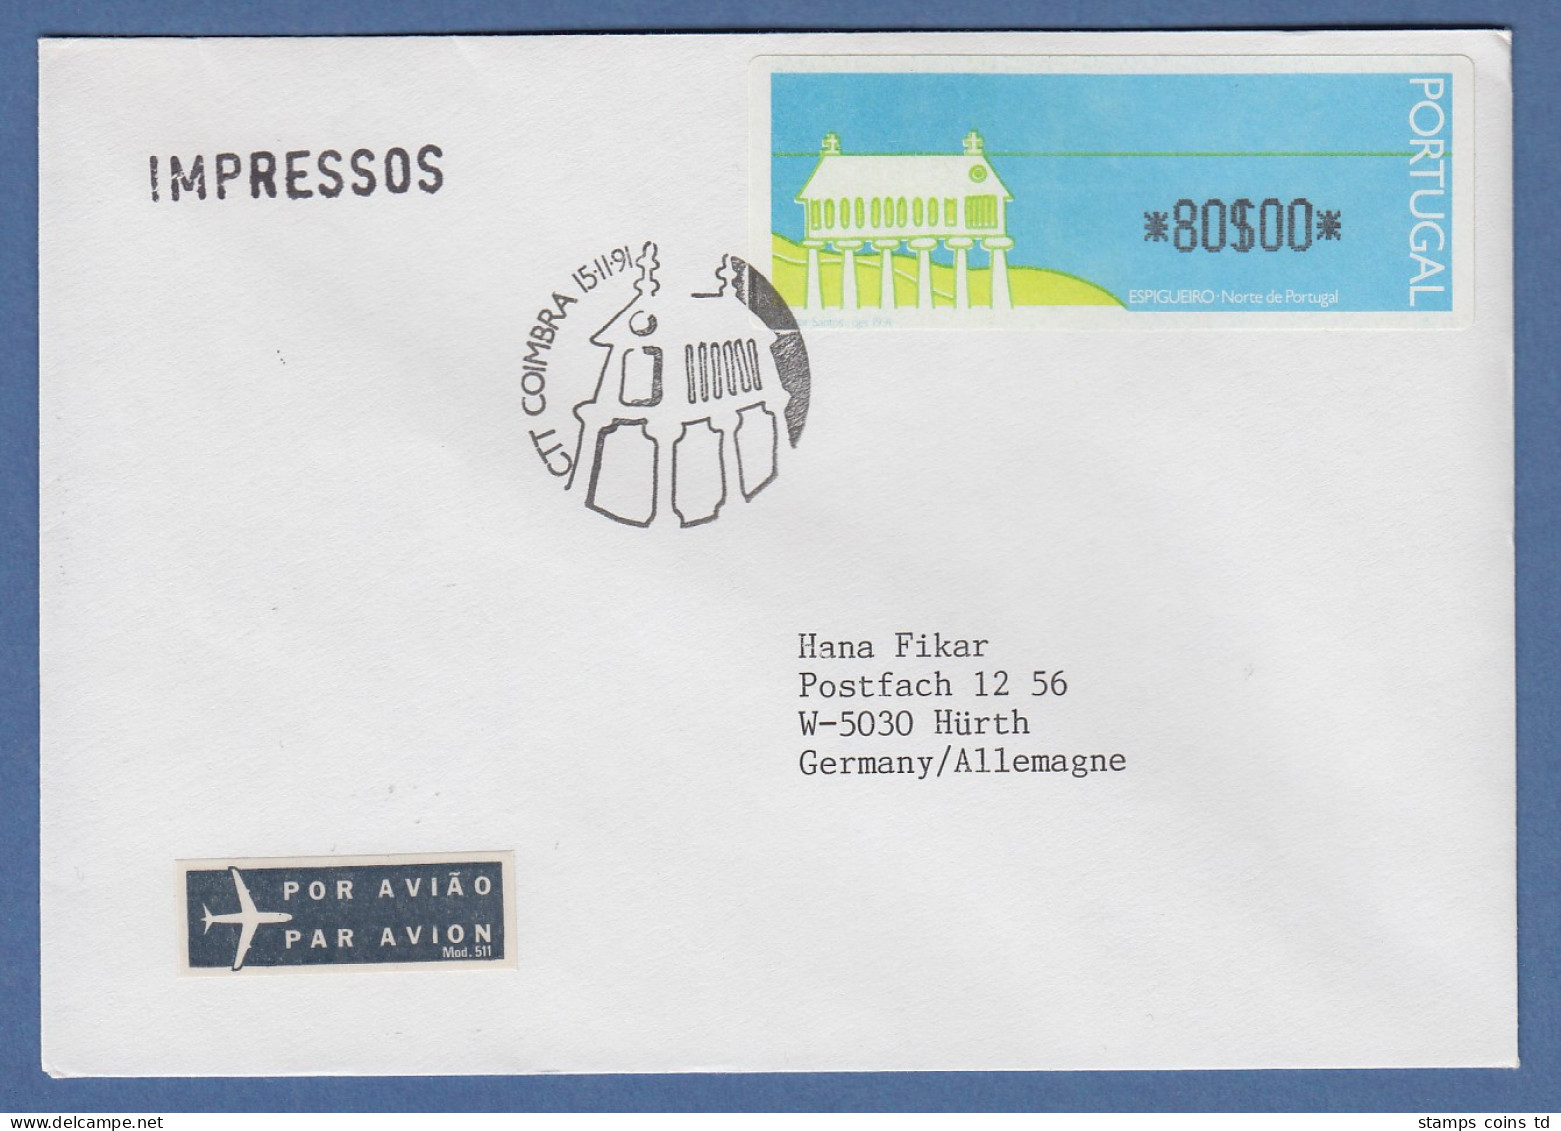 Portugal 1991 ATM Espigueiro Mi.-Nr. 3 Wert 80$00 Auf LP-Drucksache ET-O Coimbra - Machine Labels [ATM]